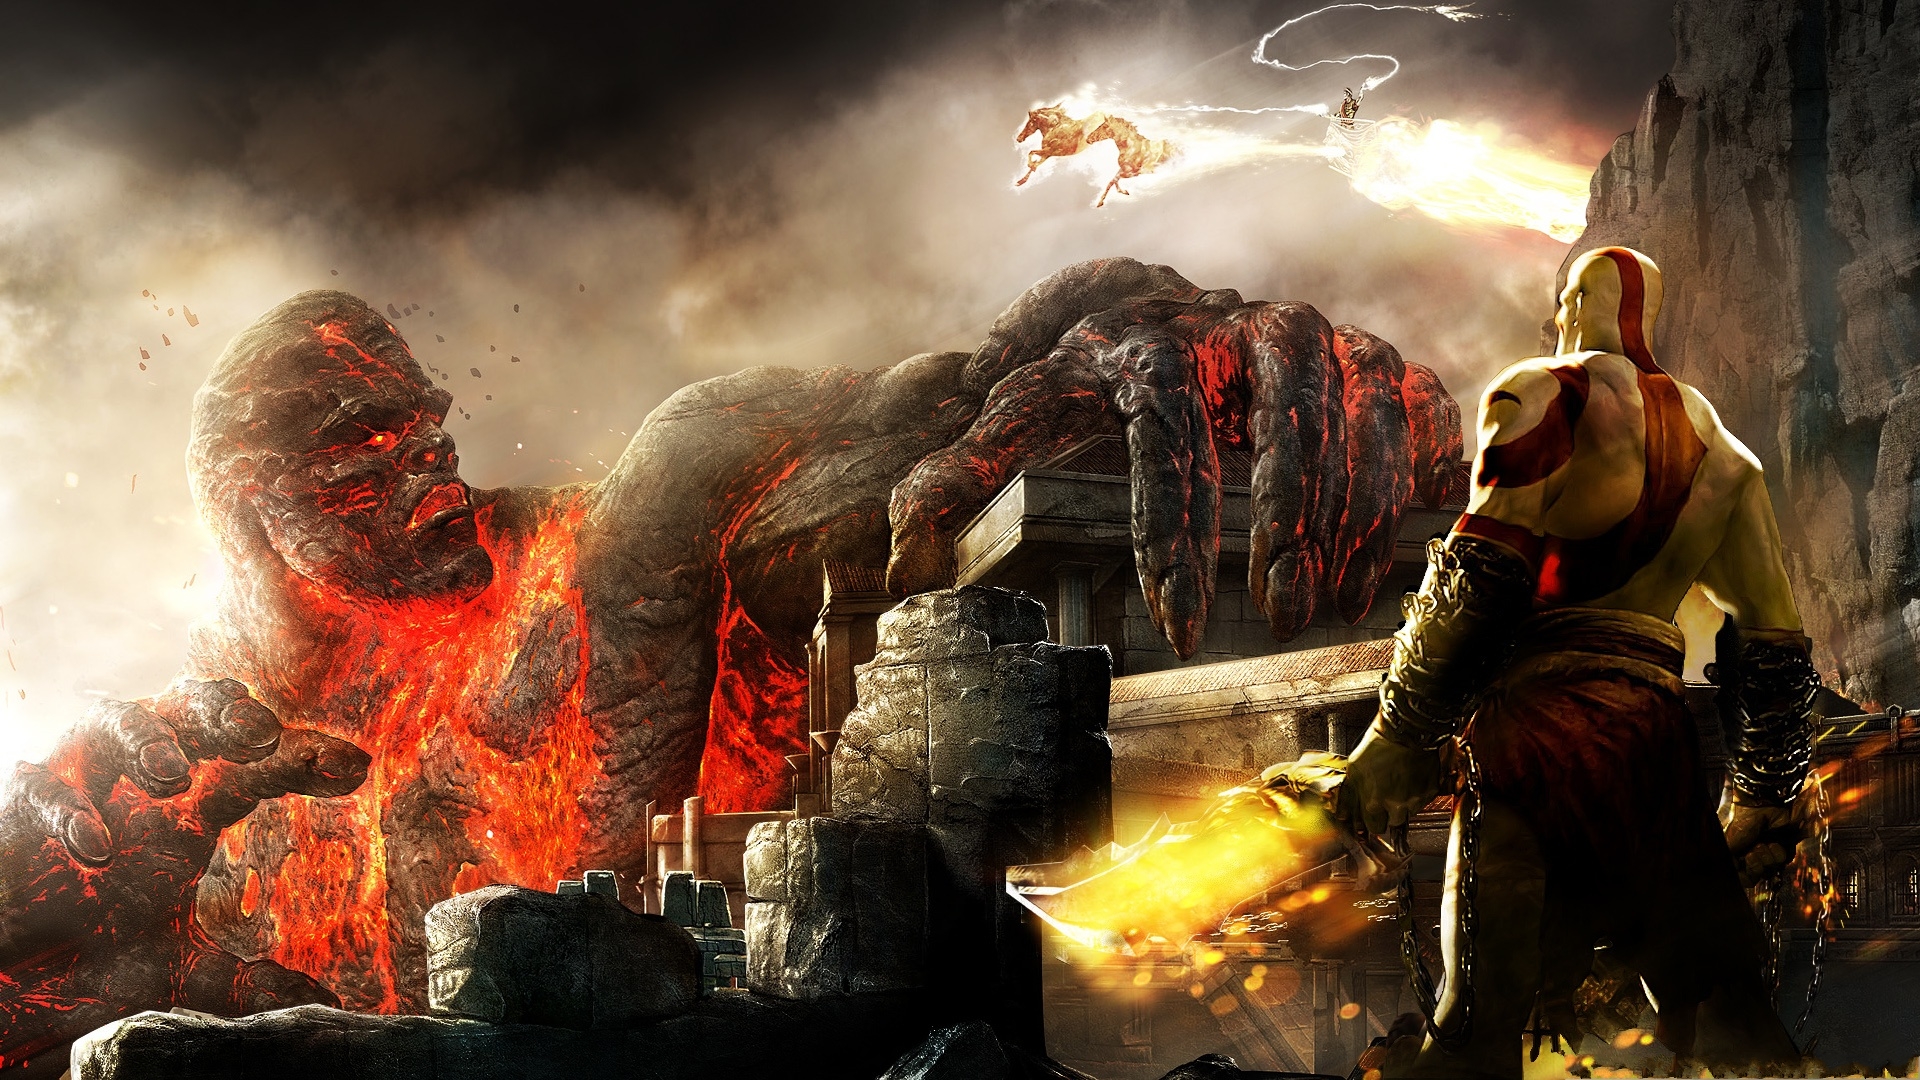 God of war game wallpaper